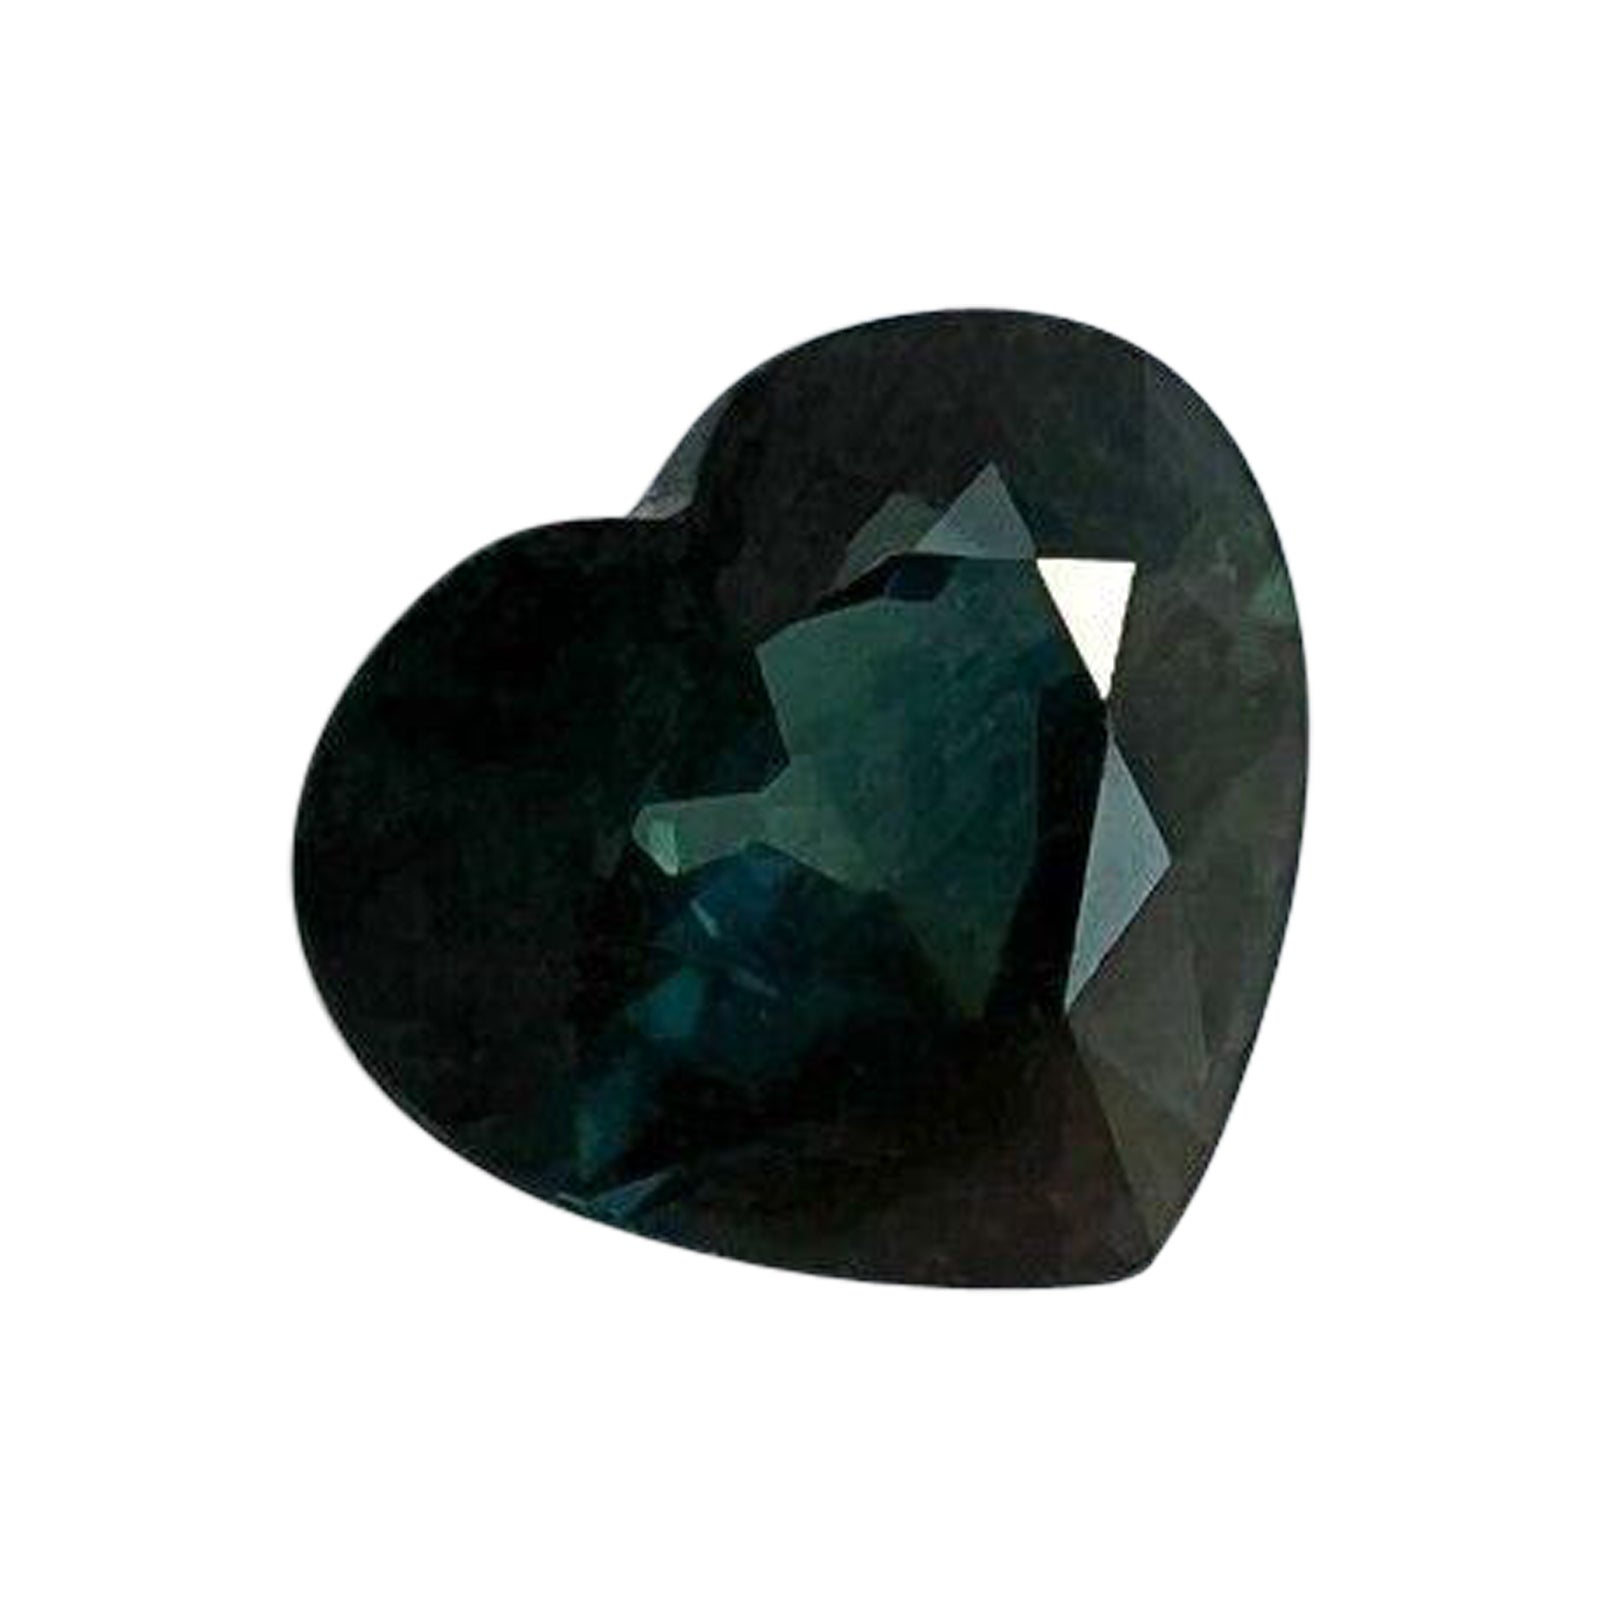 Saphir bleu sarcelle vert profond taille cœur certifié IGI de 1,18 carat